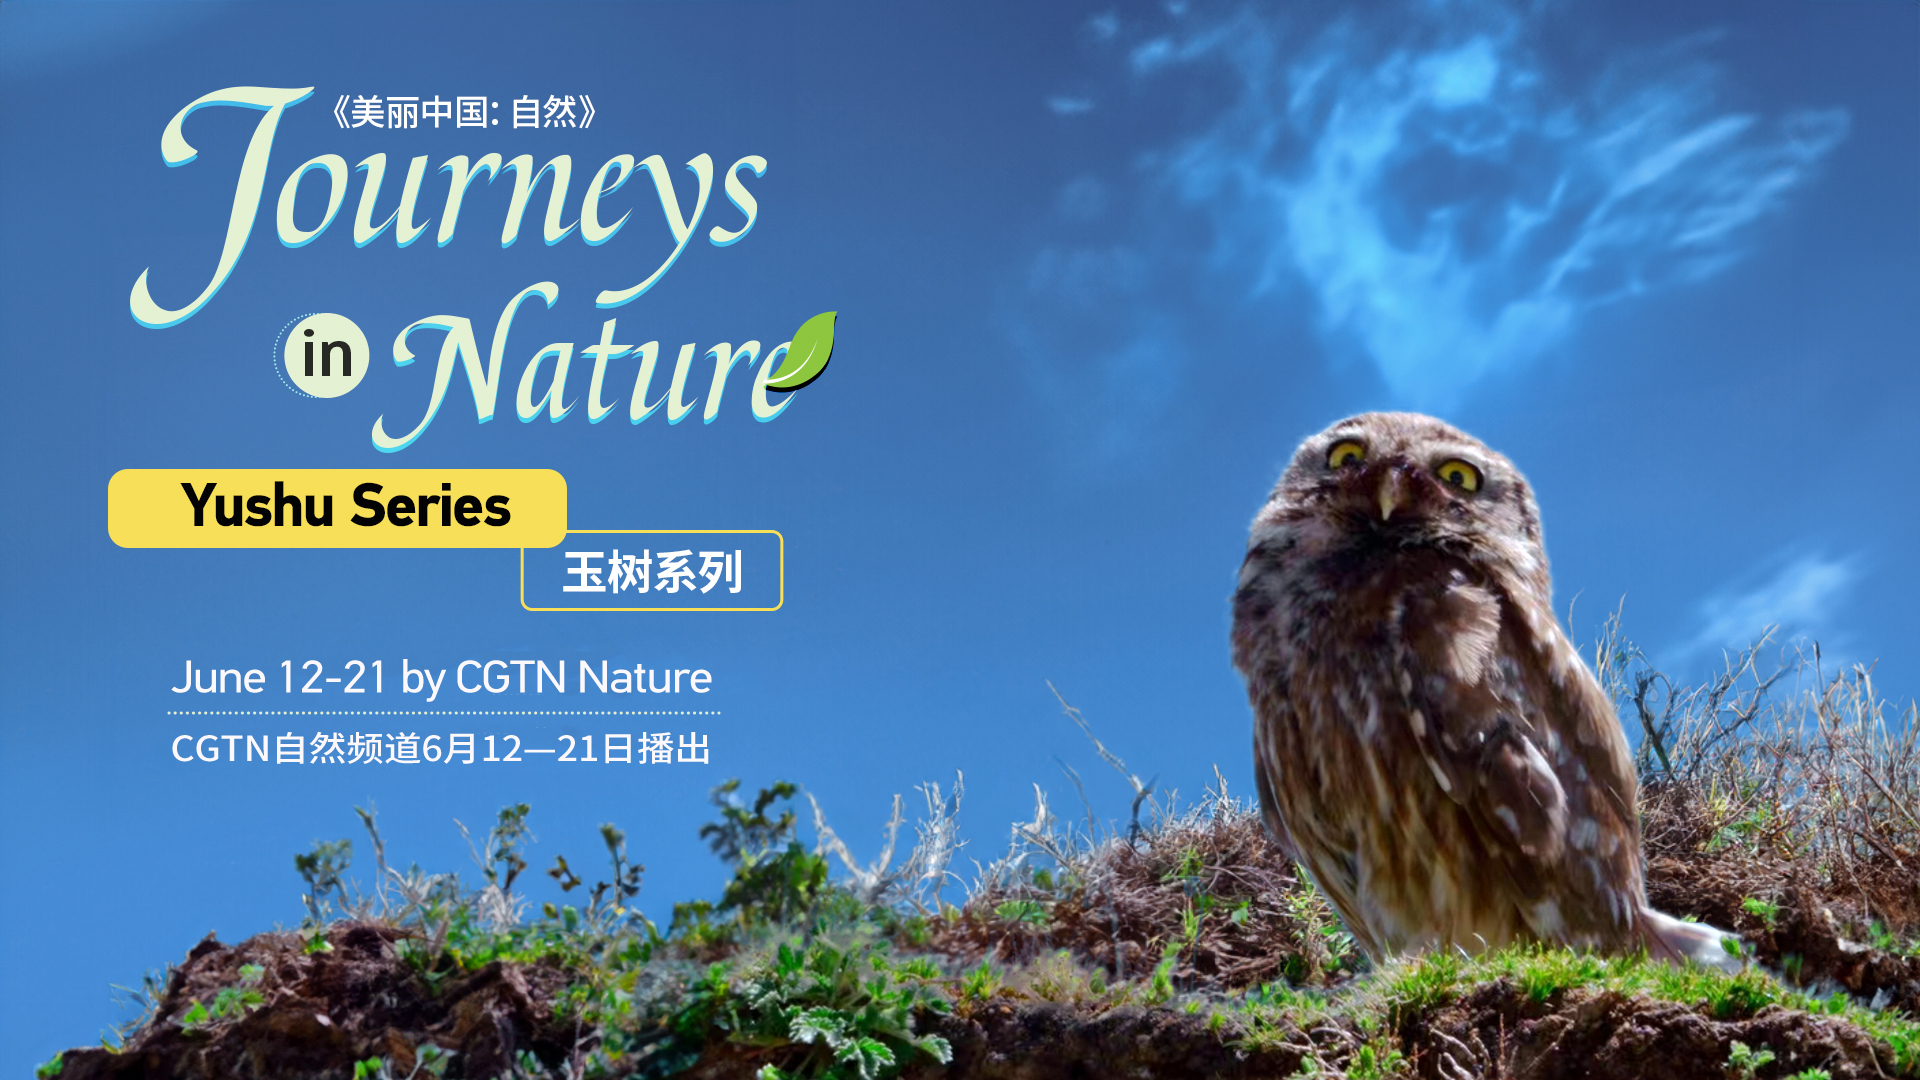 CGTN Nature to release 'Journeys in Nature: Yushu Series'